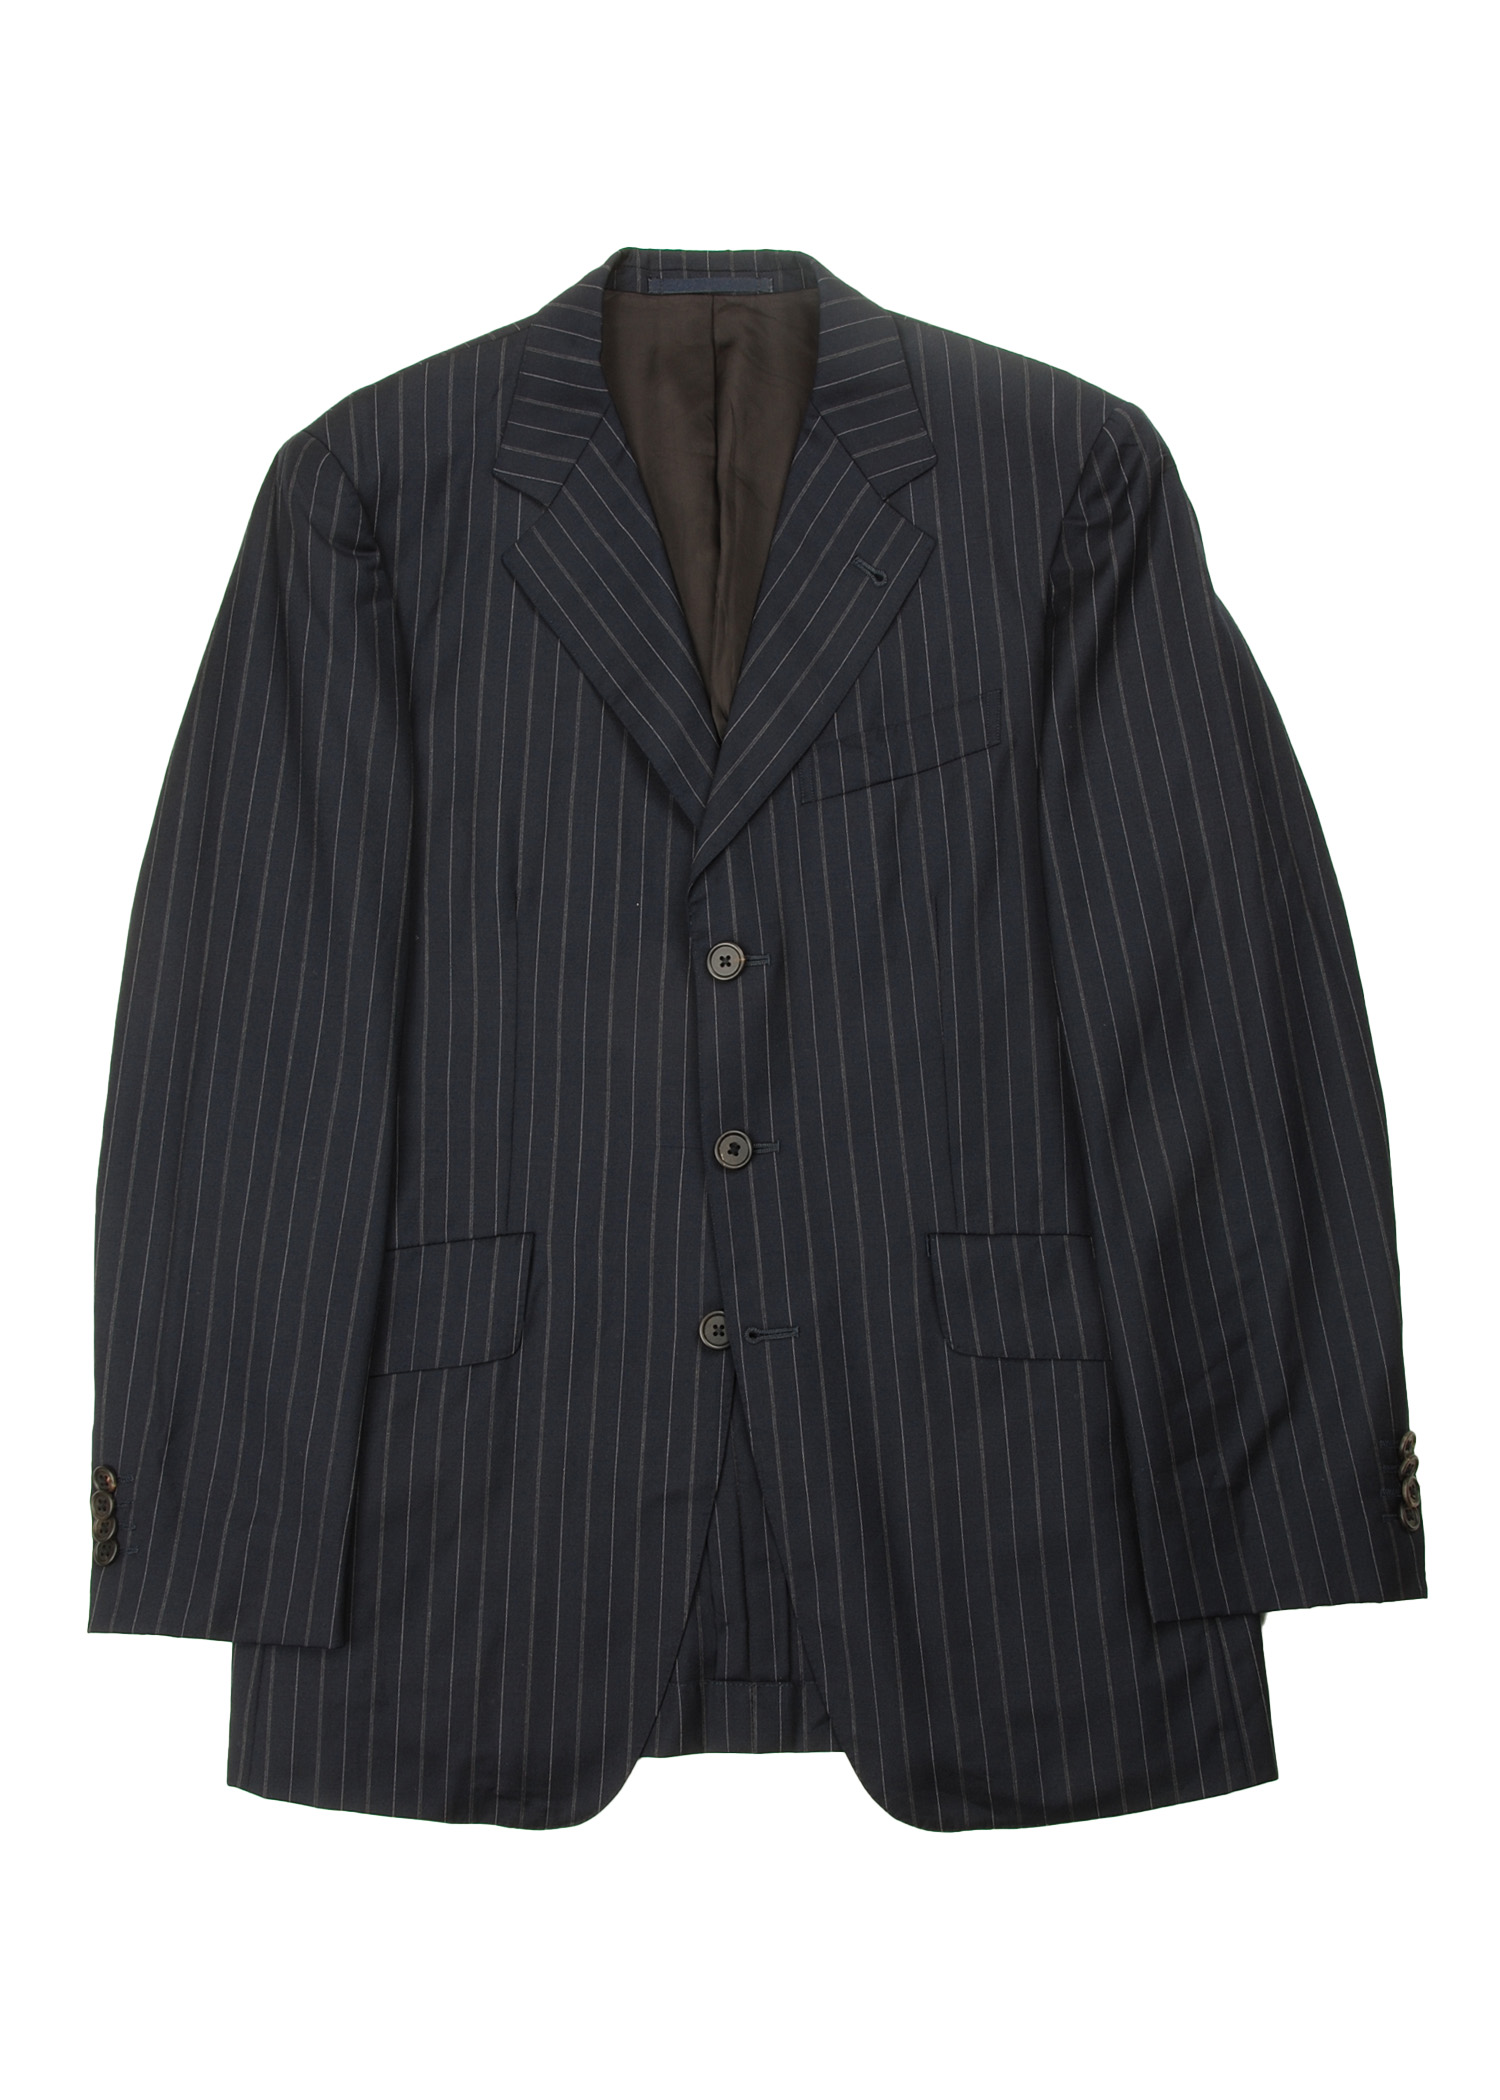 Paul Smith stripe jacket ( fabric by Loropiana)